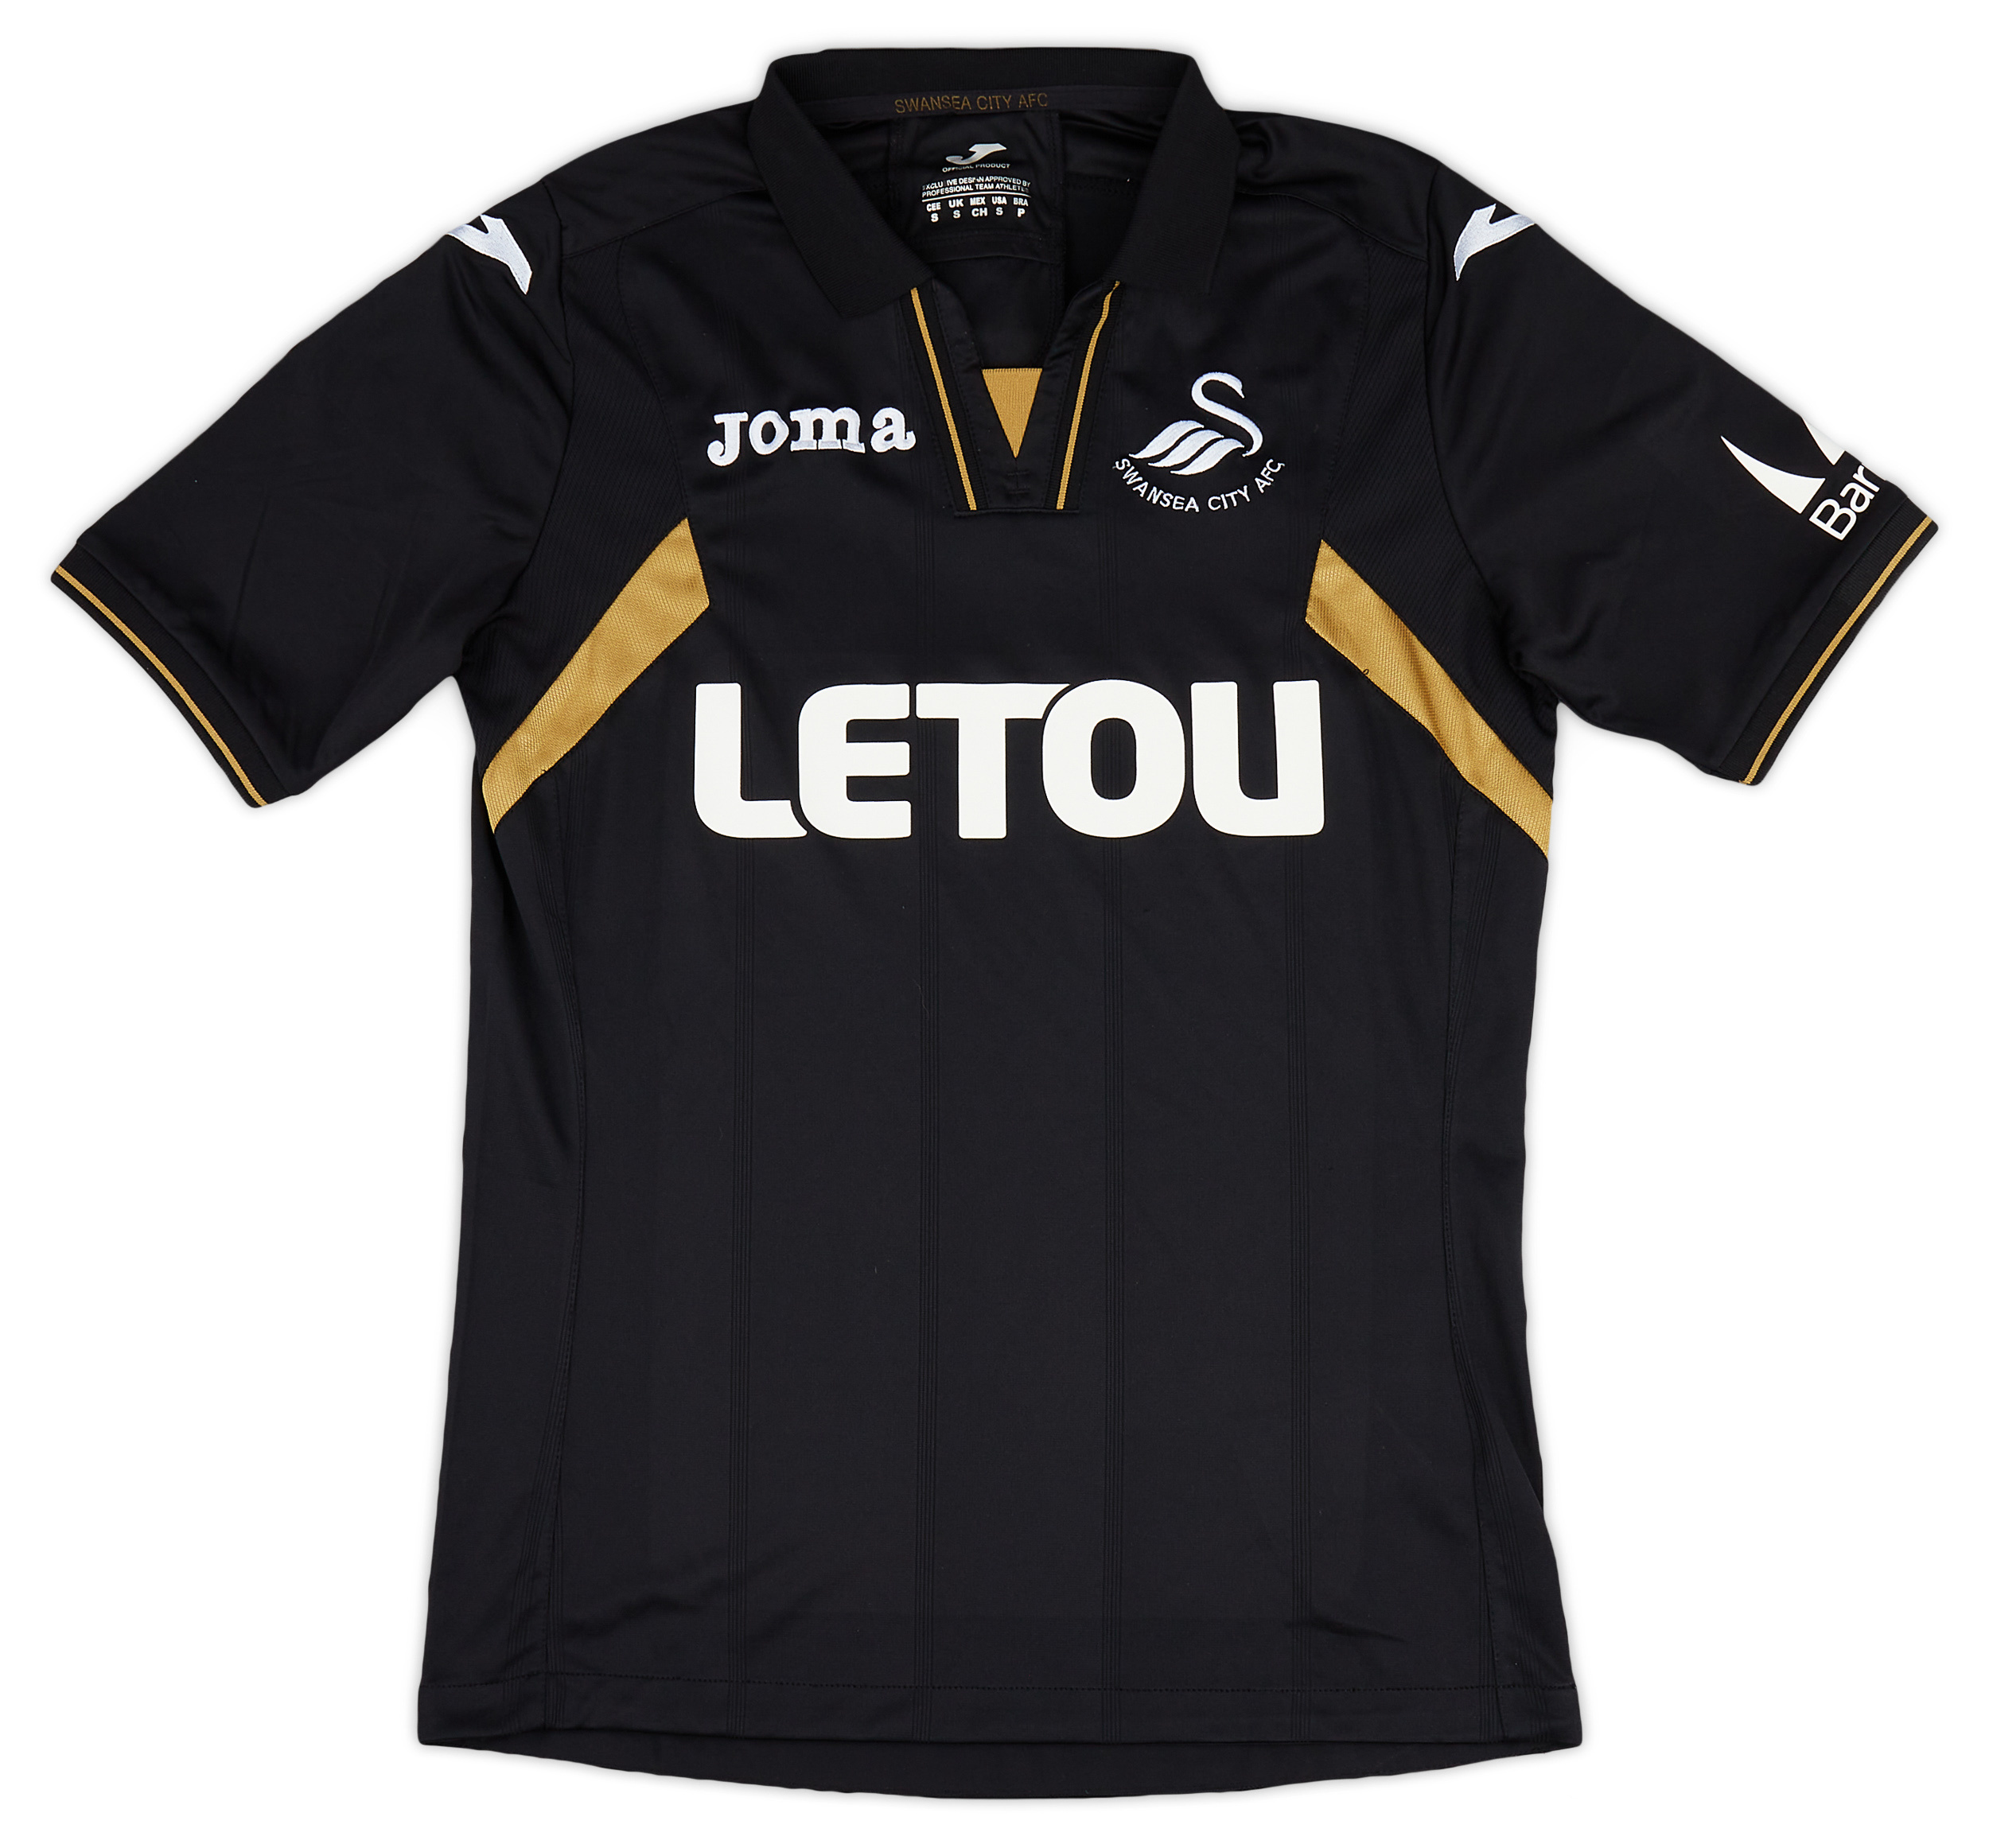 Retro Swansea City Shirt